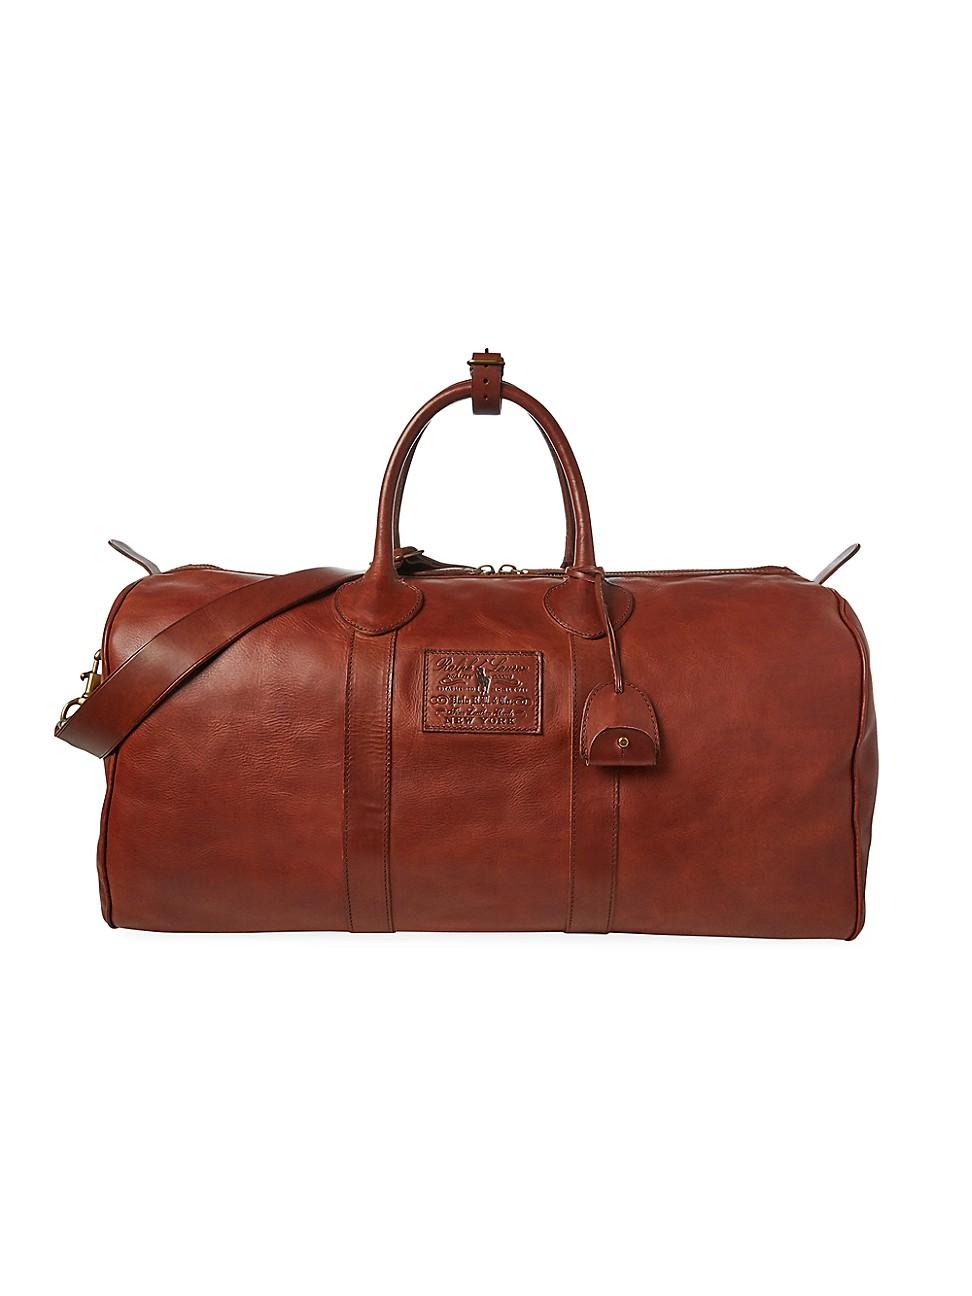 Polo Ralph Lauren Leather Duffel Bag for Men | Lyst